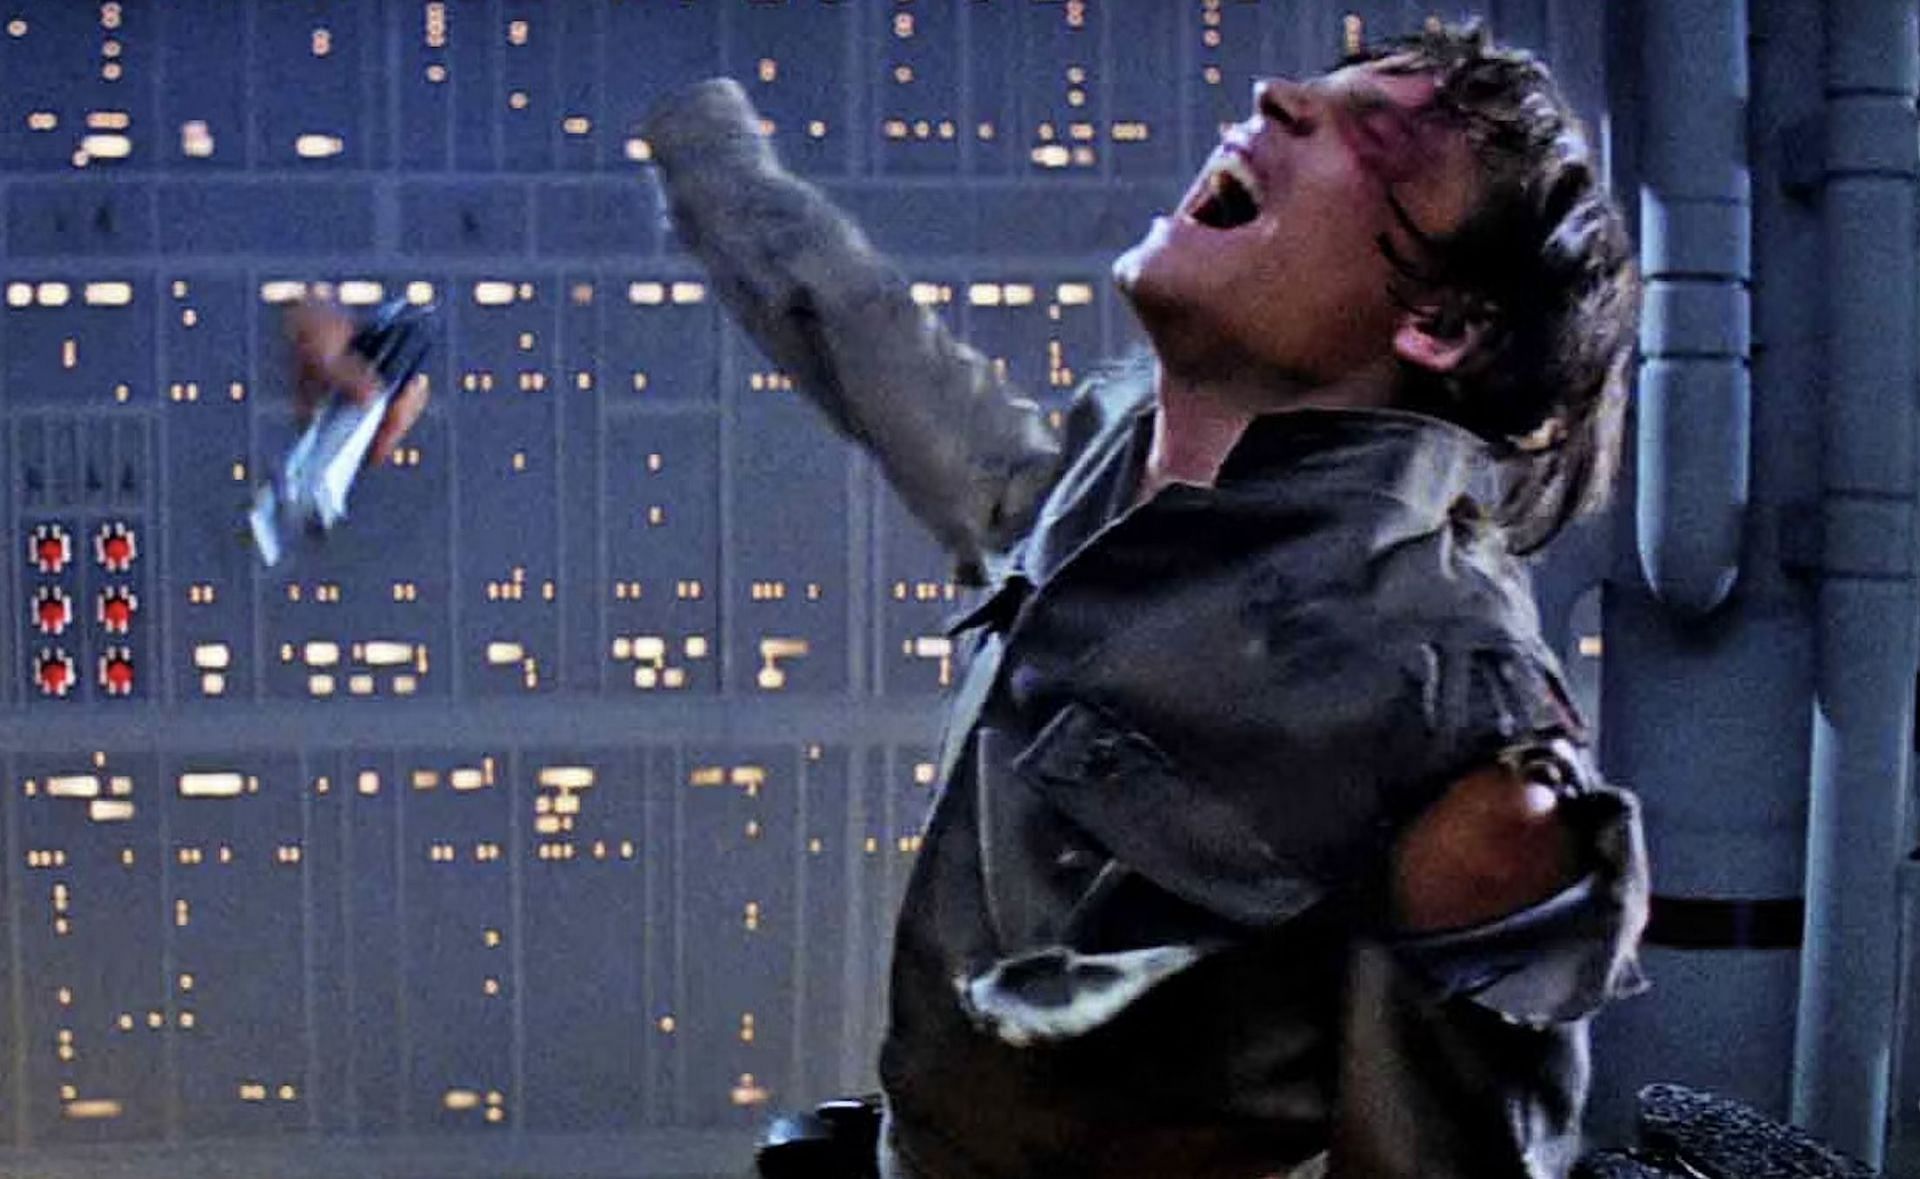 Luke Skywalker loses his hand in a lightsaber duel with Darth Vader (Image via Lucasfilm)